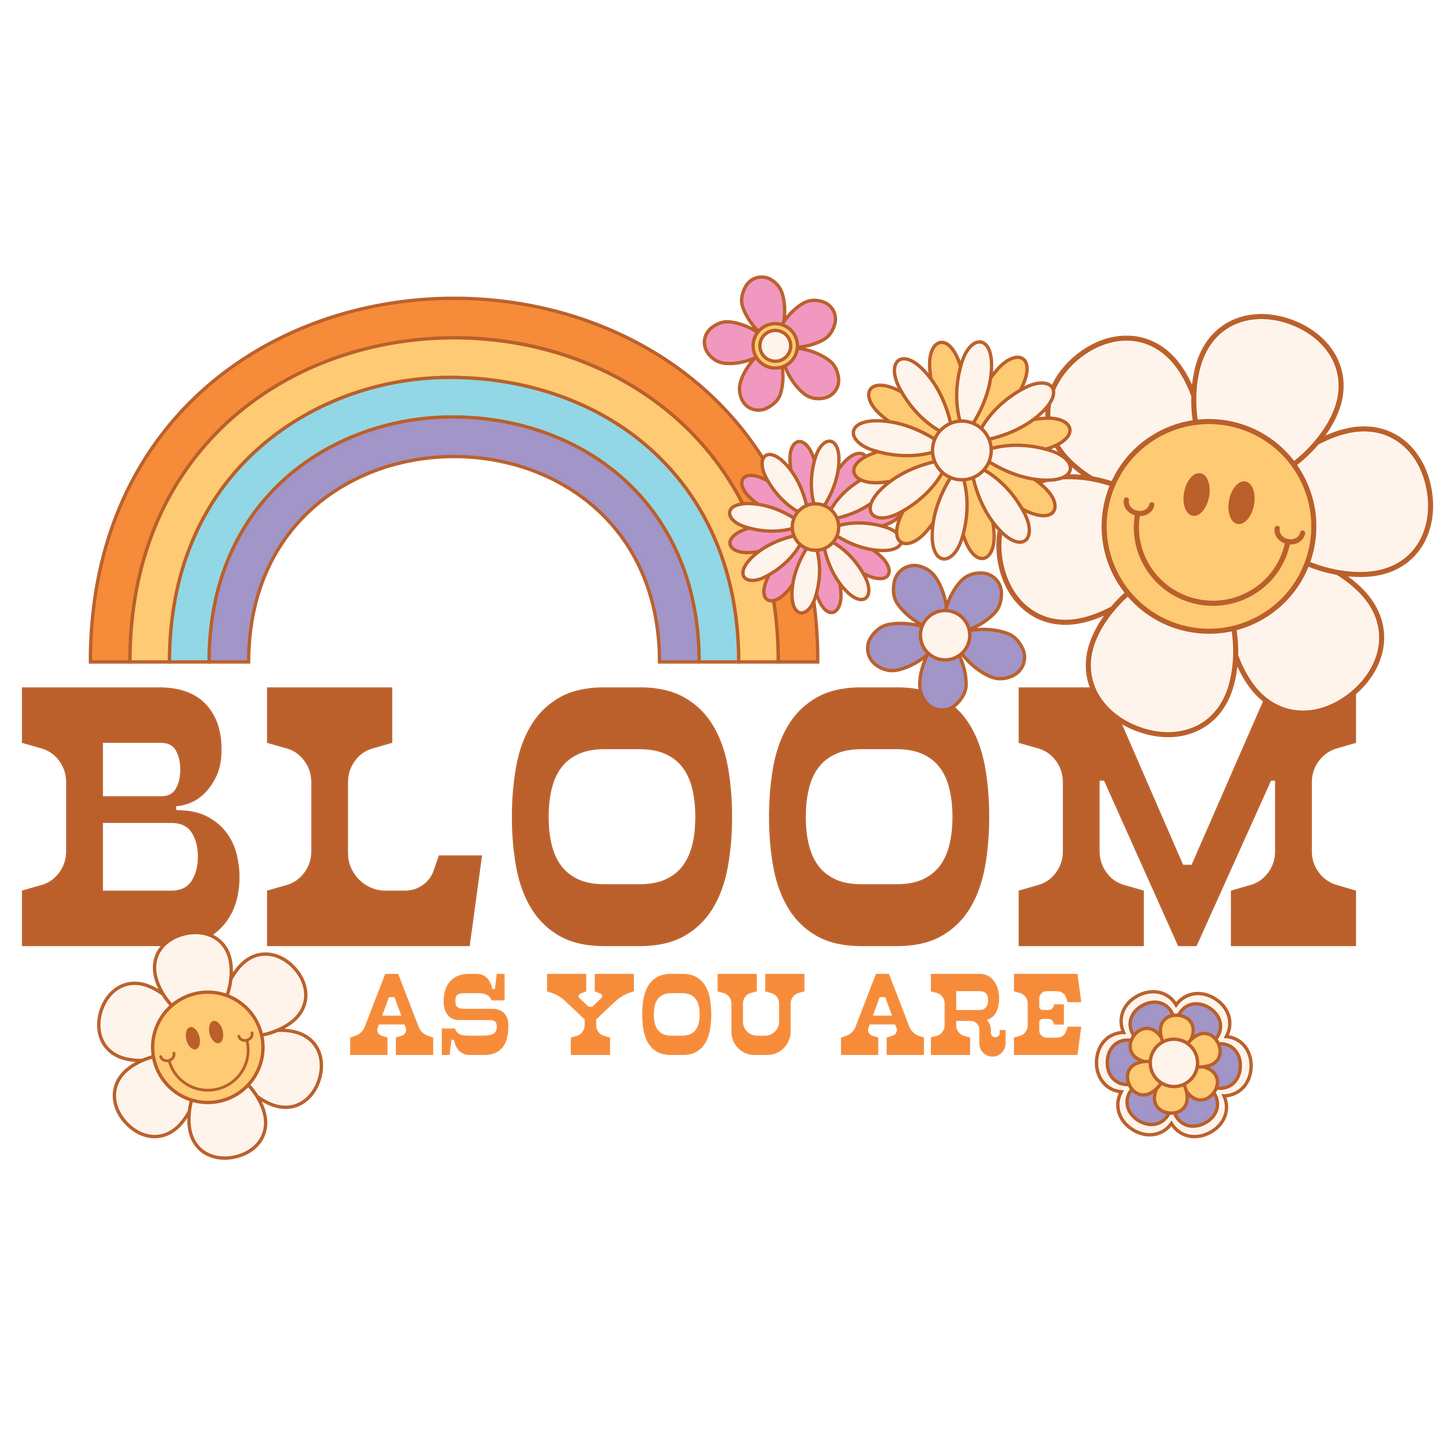 Retro Bloom As You Are Vinyl, Sticker, 3x3 in